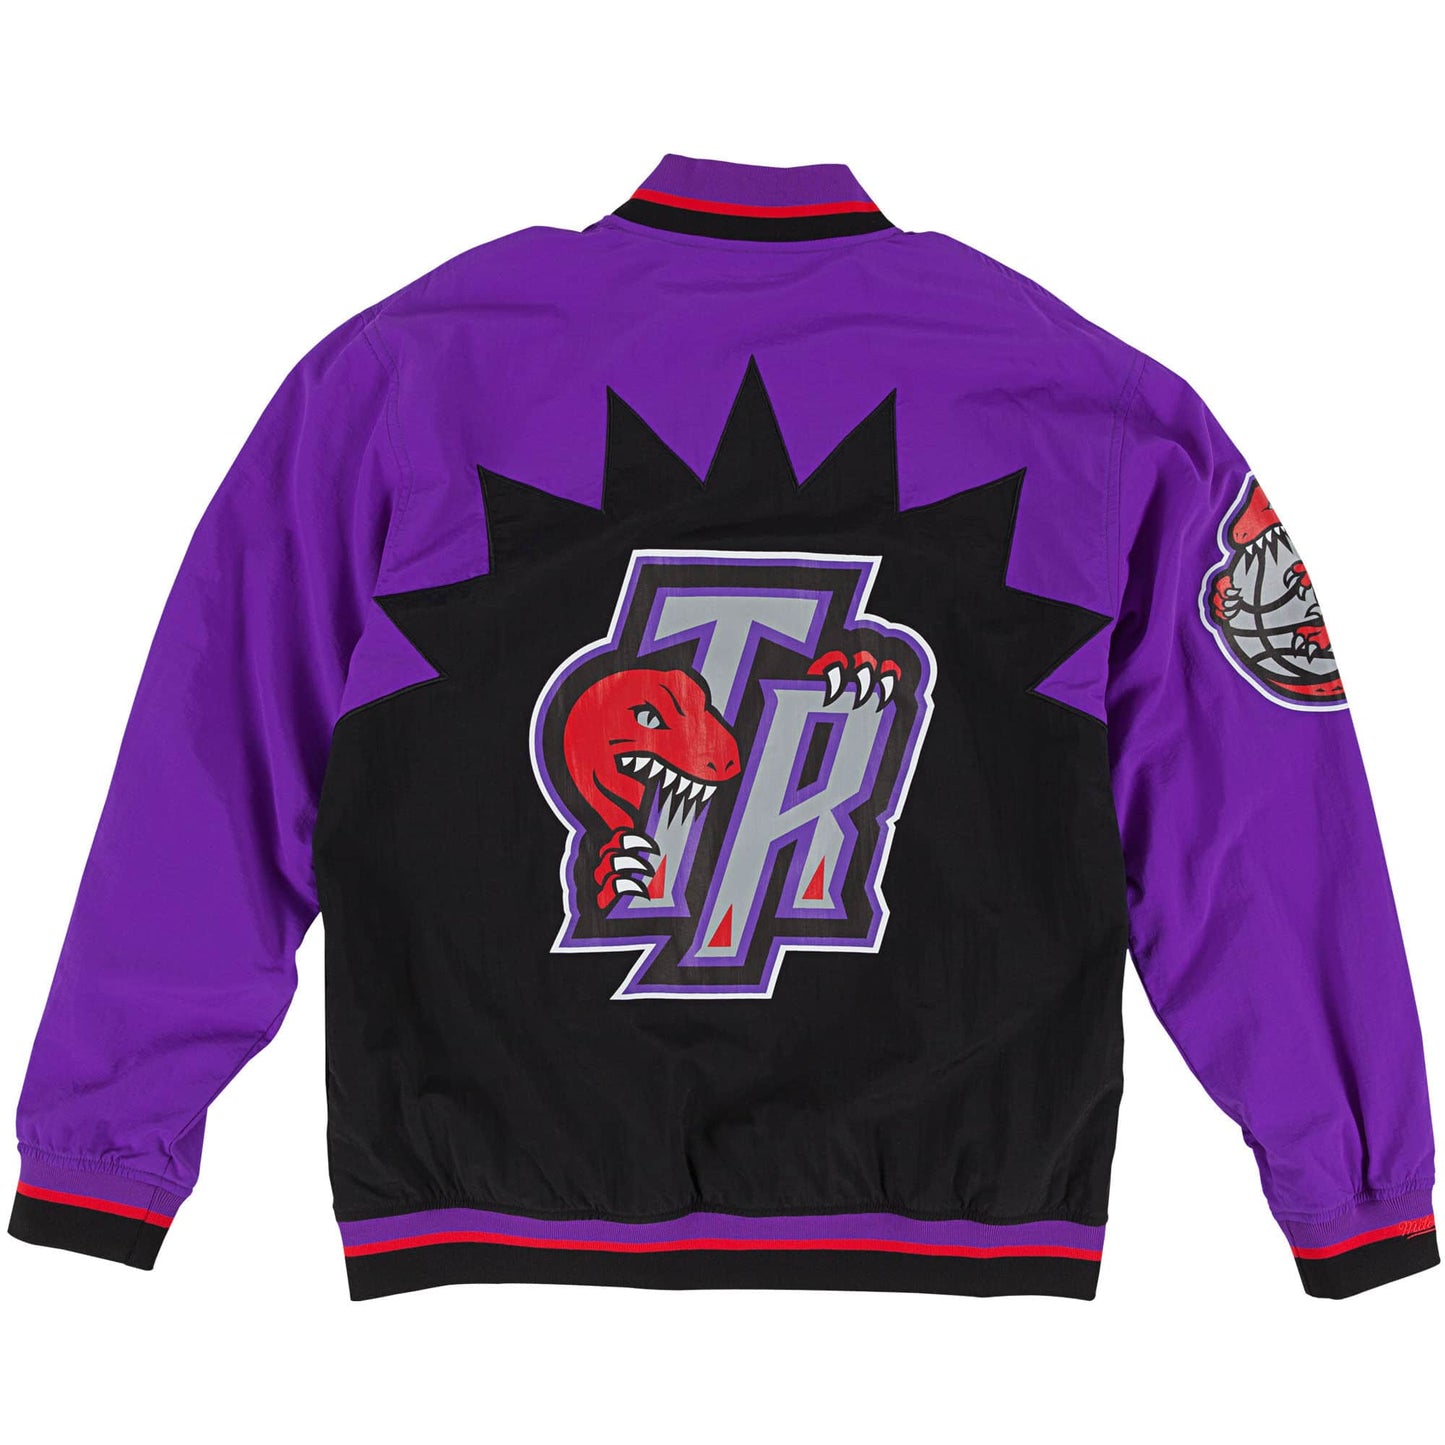 Authentic Warm Up Jacket Toronto Raptors 1995-96